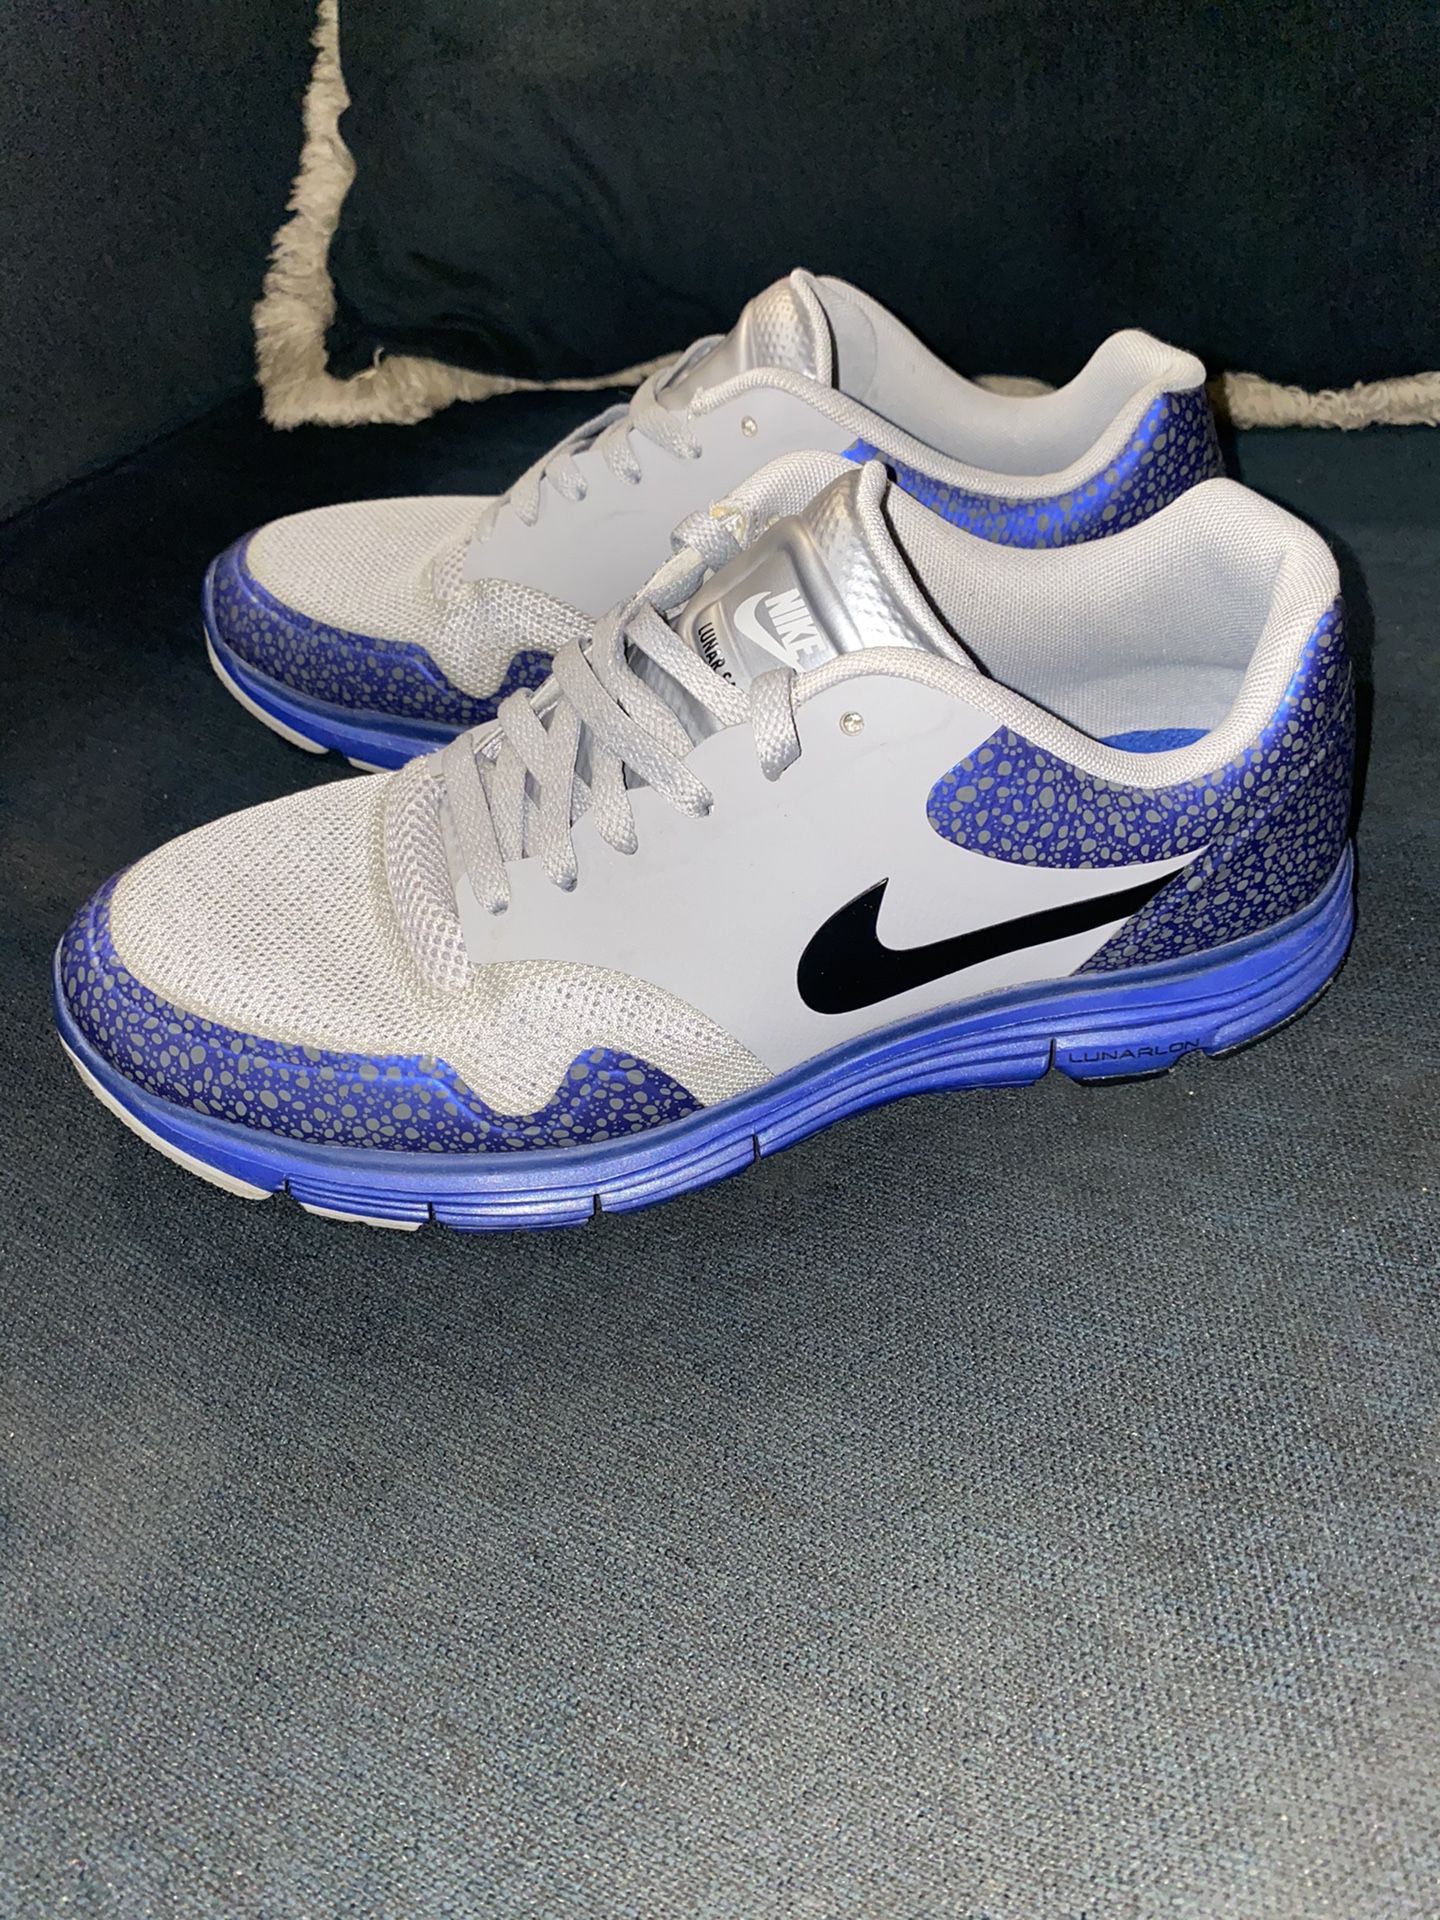 New Nike Lunar Safari Men Running Shoes Sz. 9